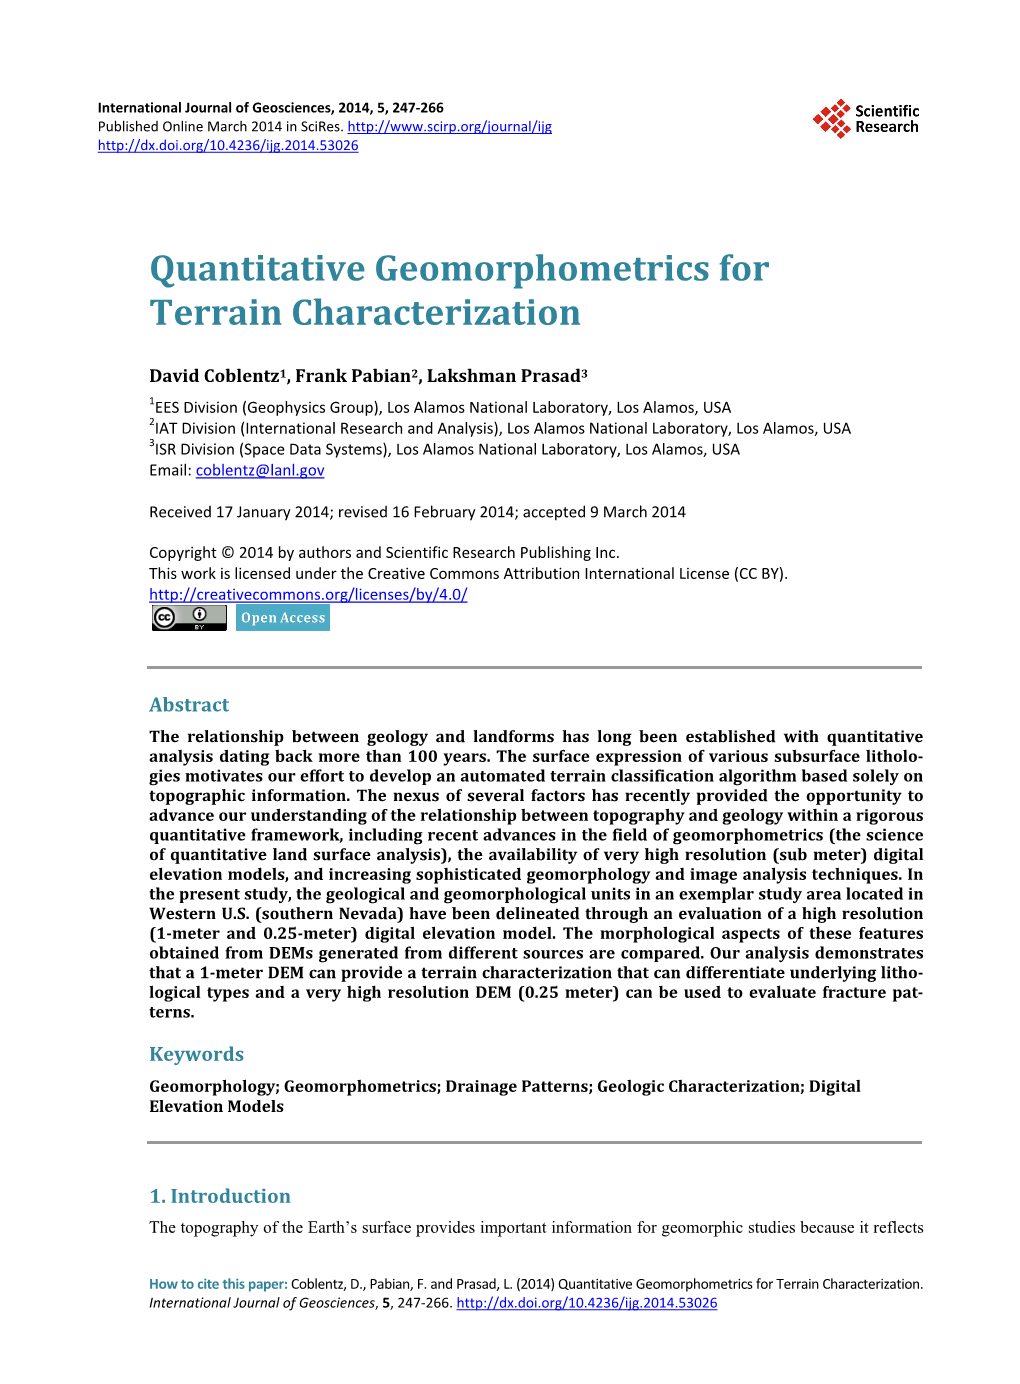 Quantitative Geomorphometrics for Terrain Characterization